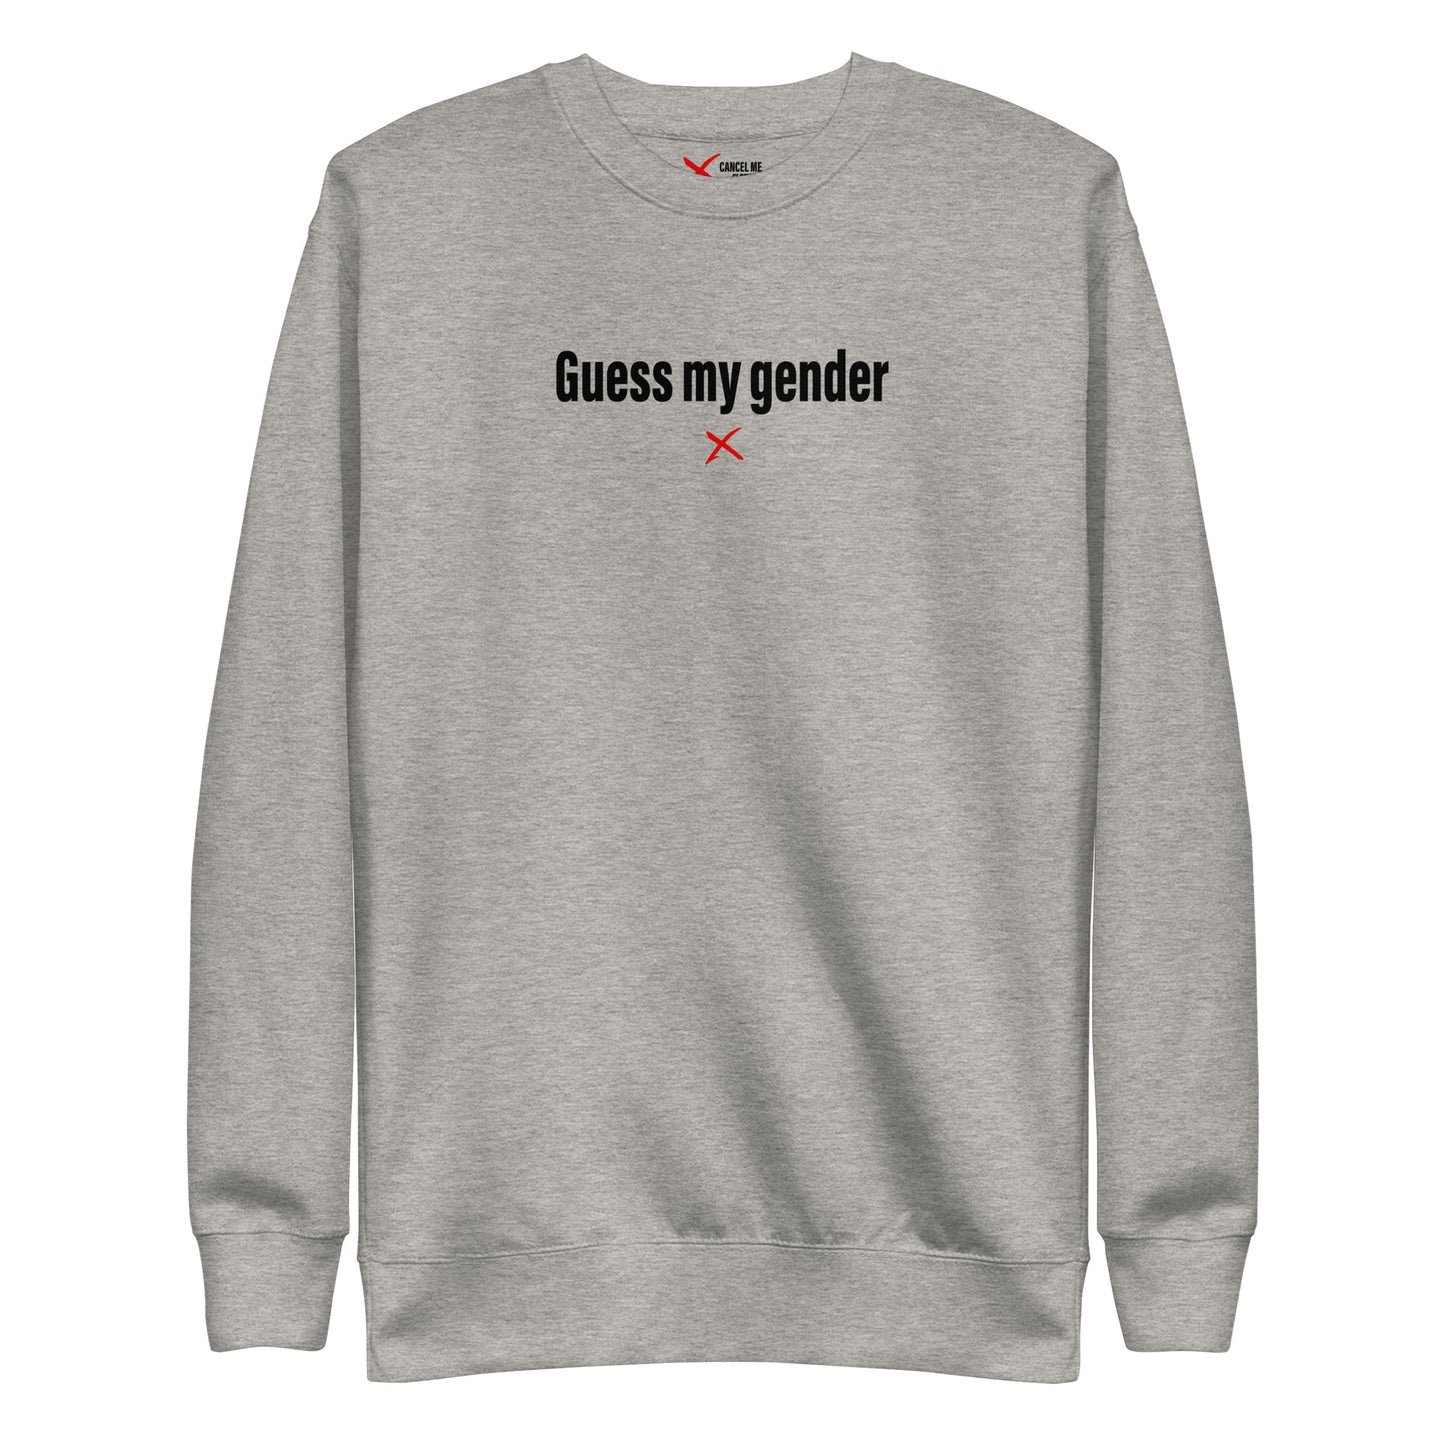 Guess my gender - Sweatshirt